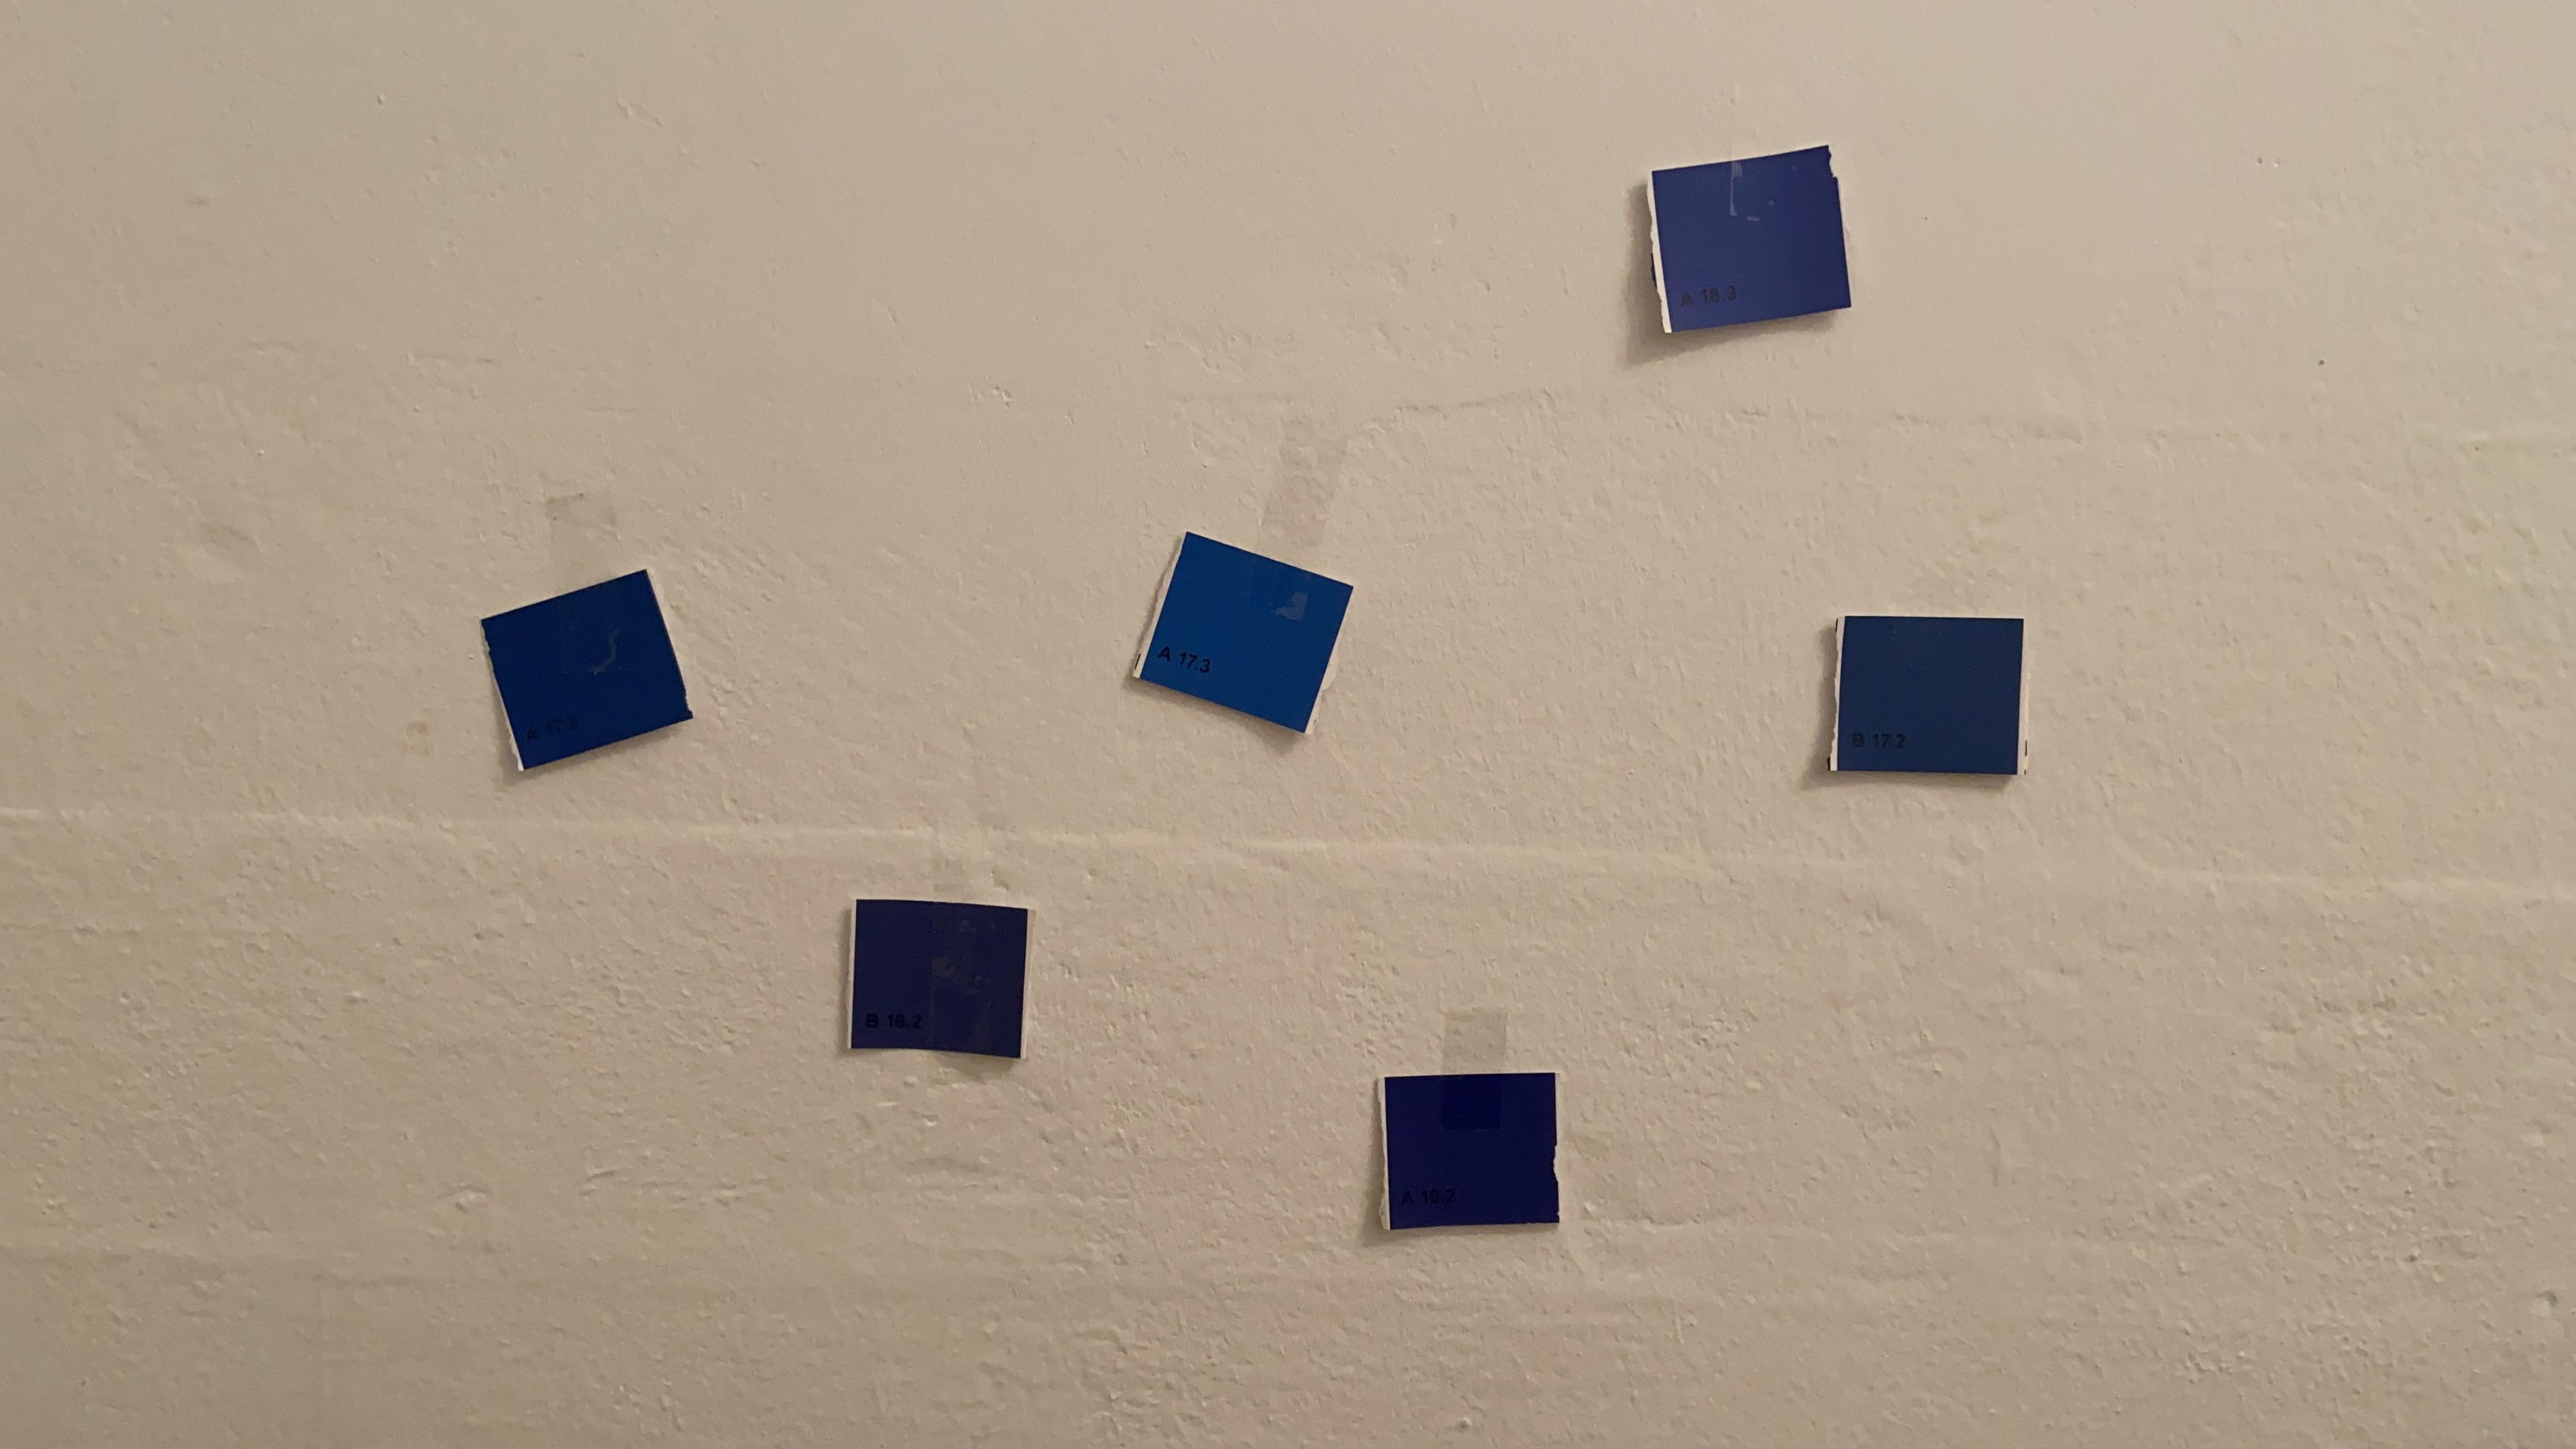 #blau oder #blau?
trying something new.
#küchenwand #kobaltblau #bauhaus